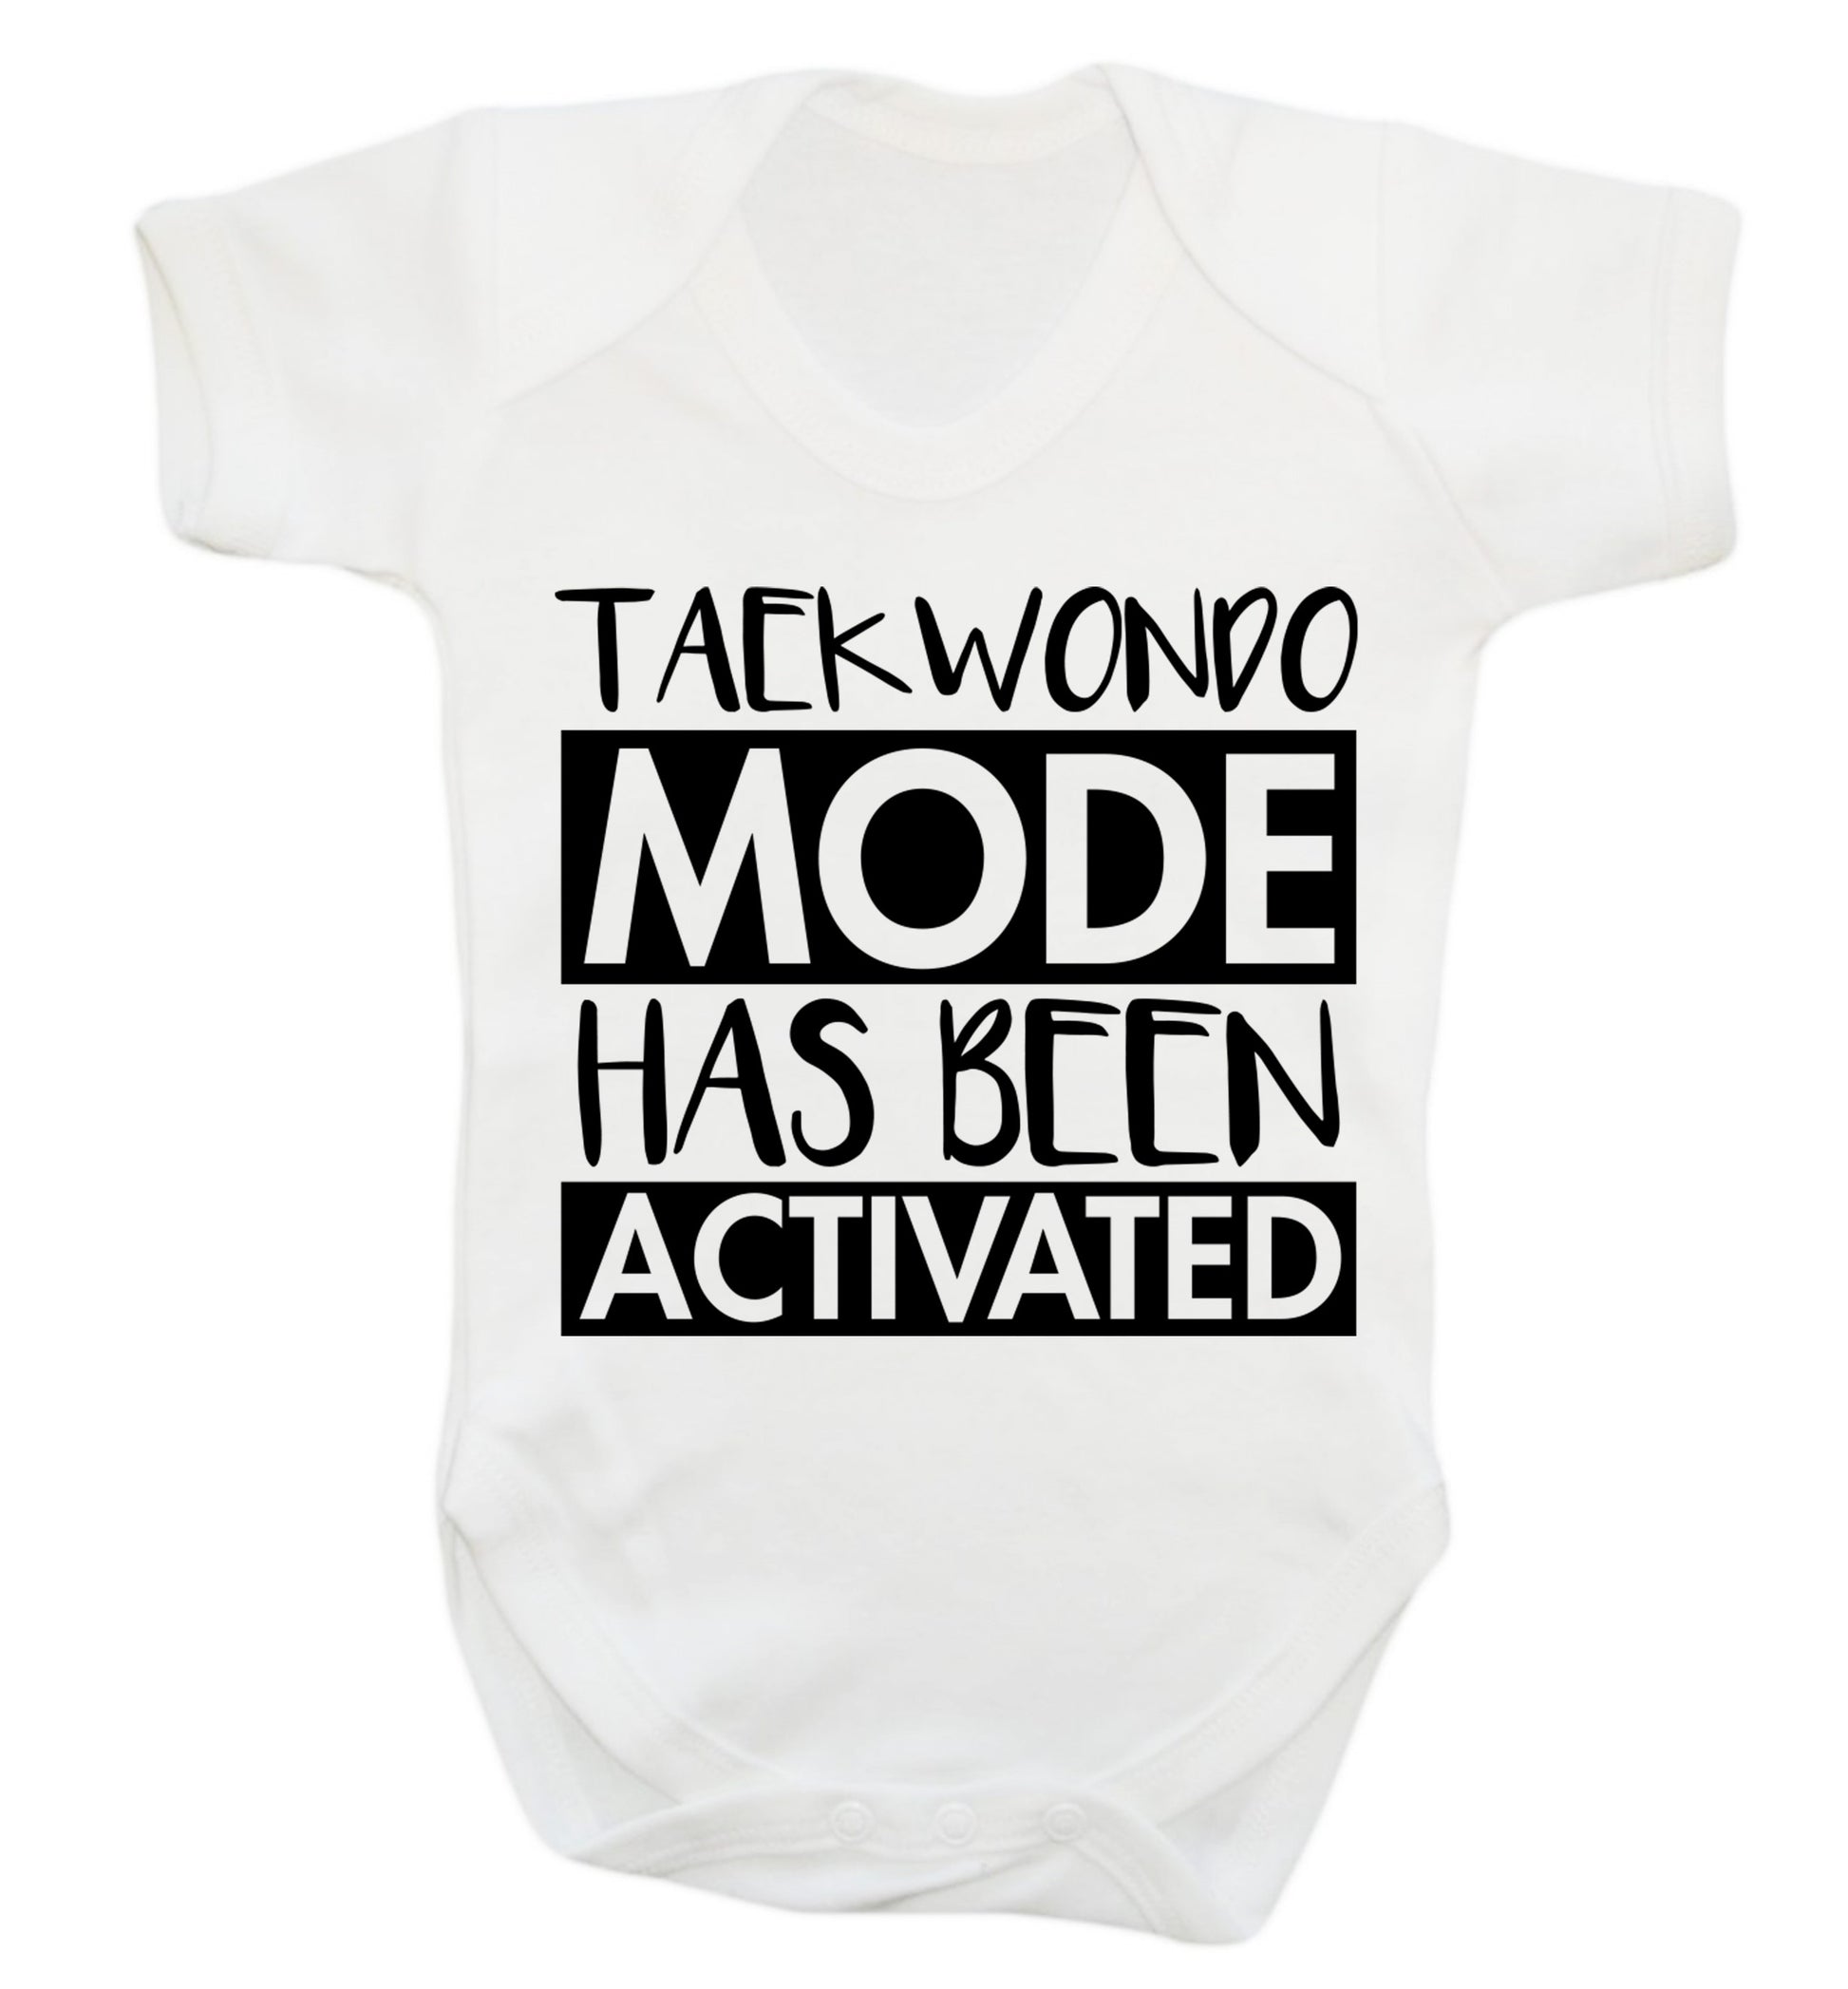 Taekwondo mode activated Baby Vest white 18-24 months